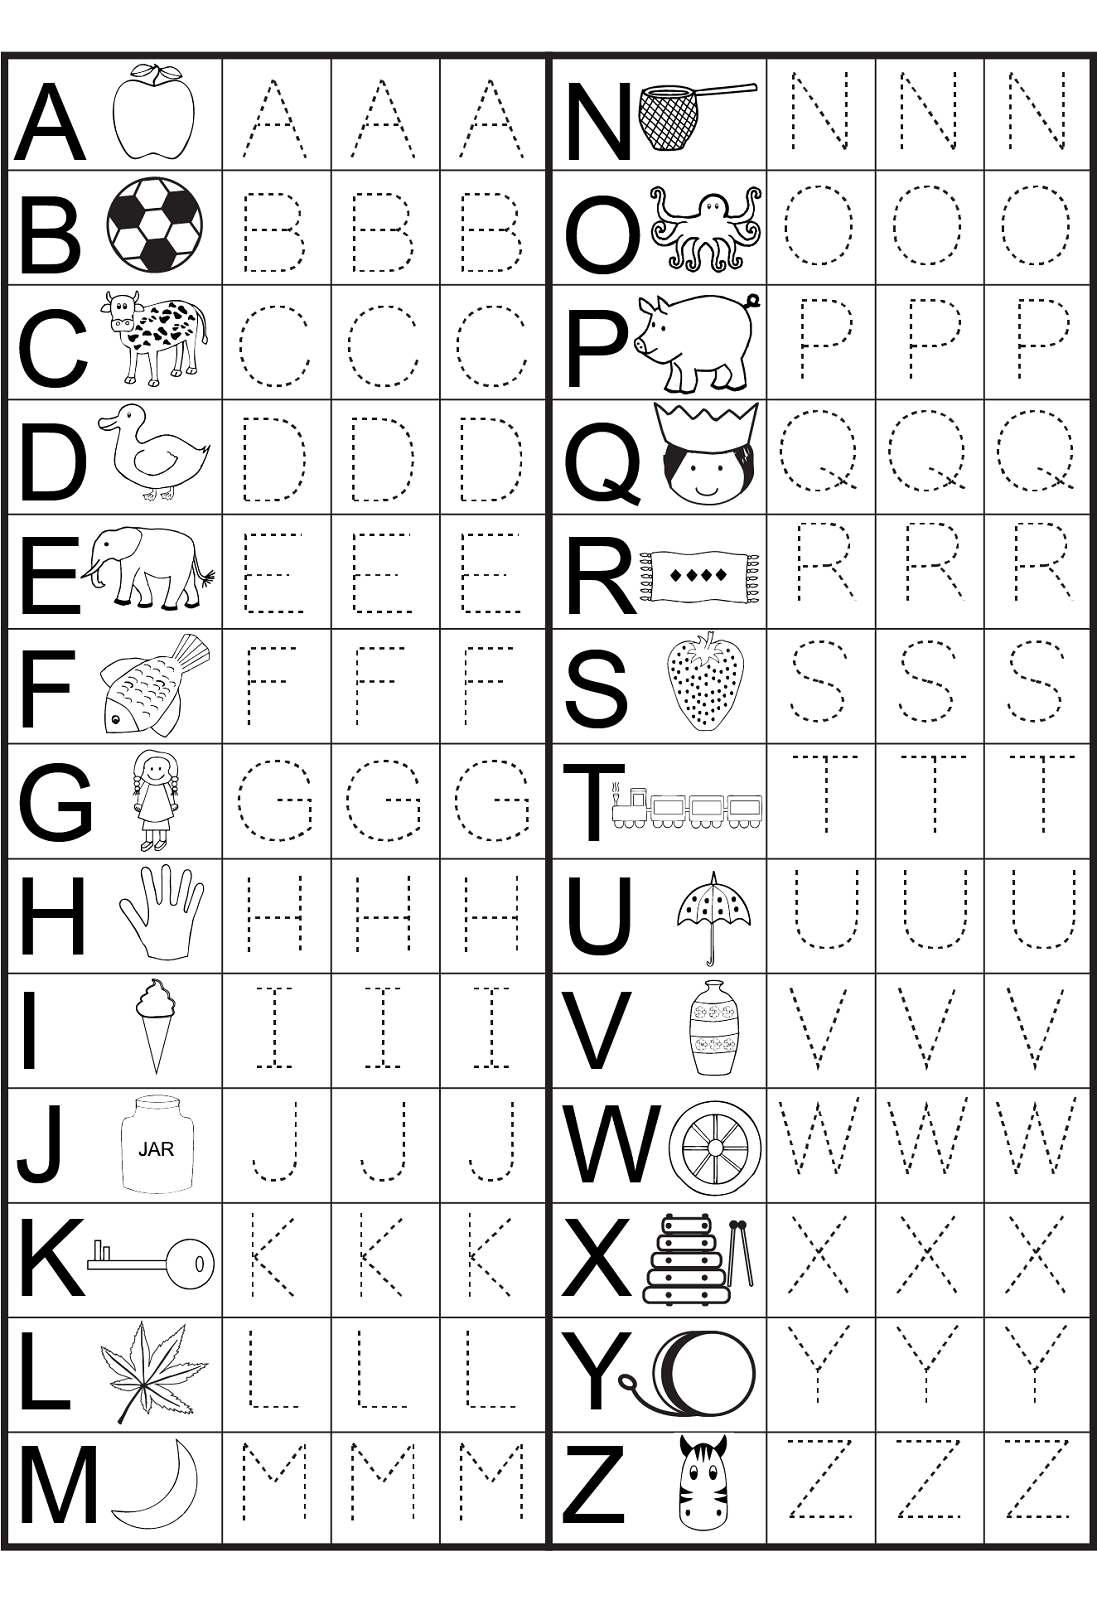 Kindergarten Alphabet Worksheets To Print | Preschool within Alphabet Worksheets Free